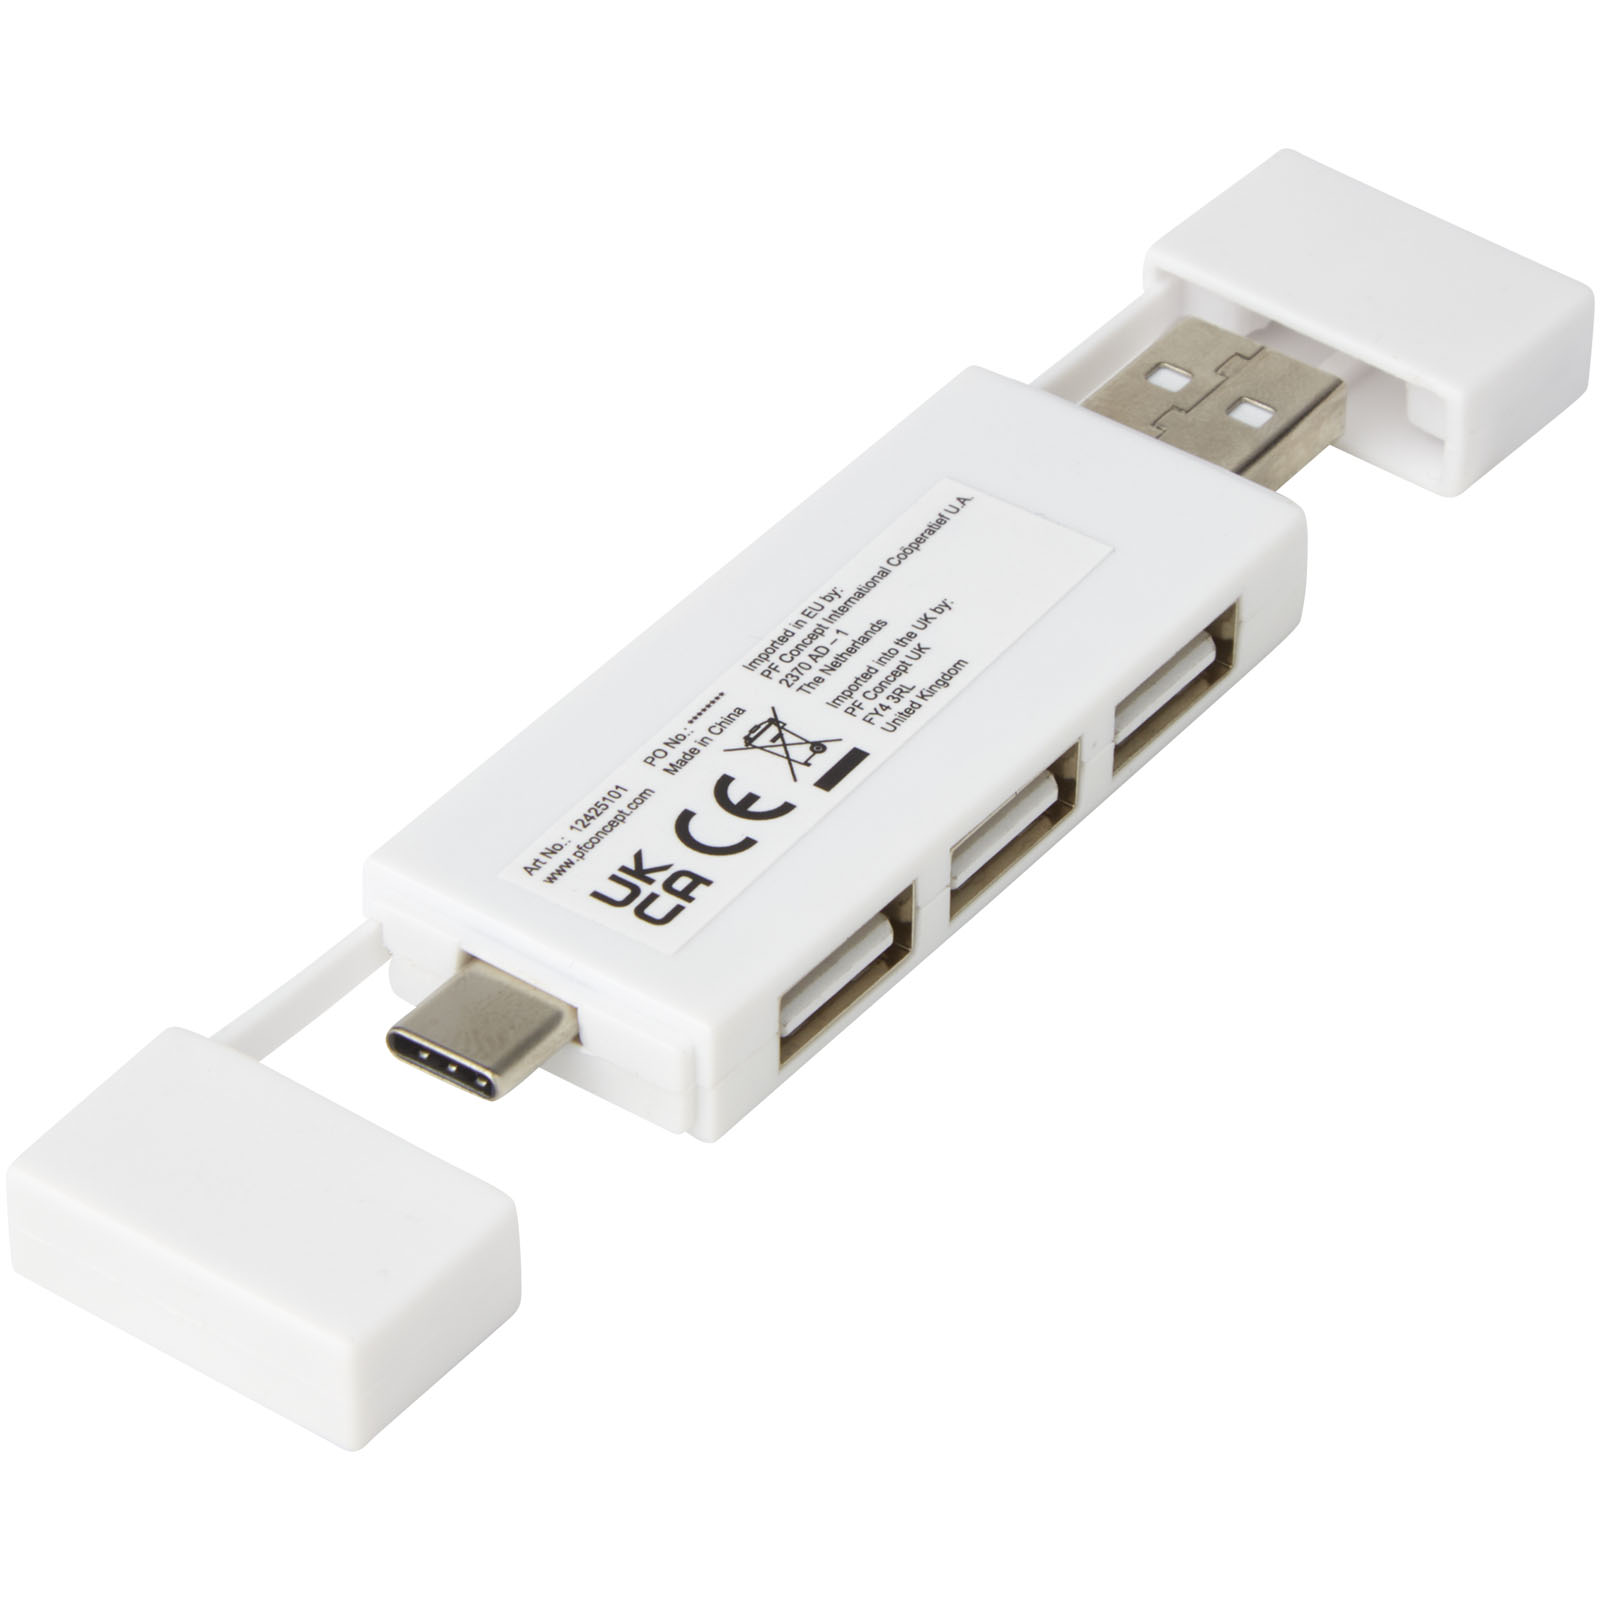 Hubs USB publicitaires - Hub double USB 2.0 Mulan - 2